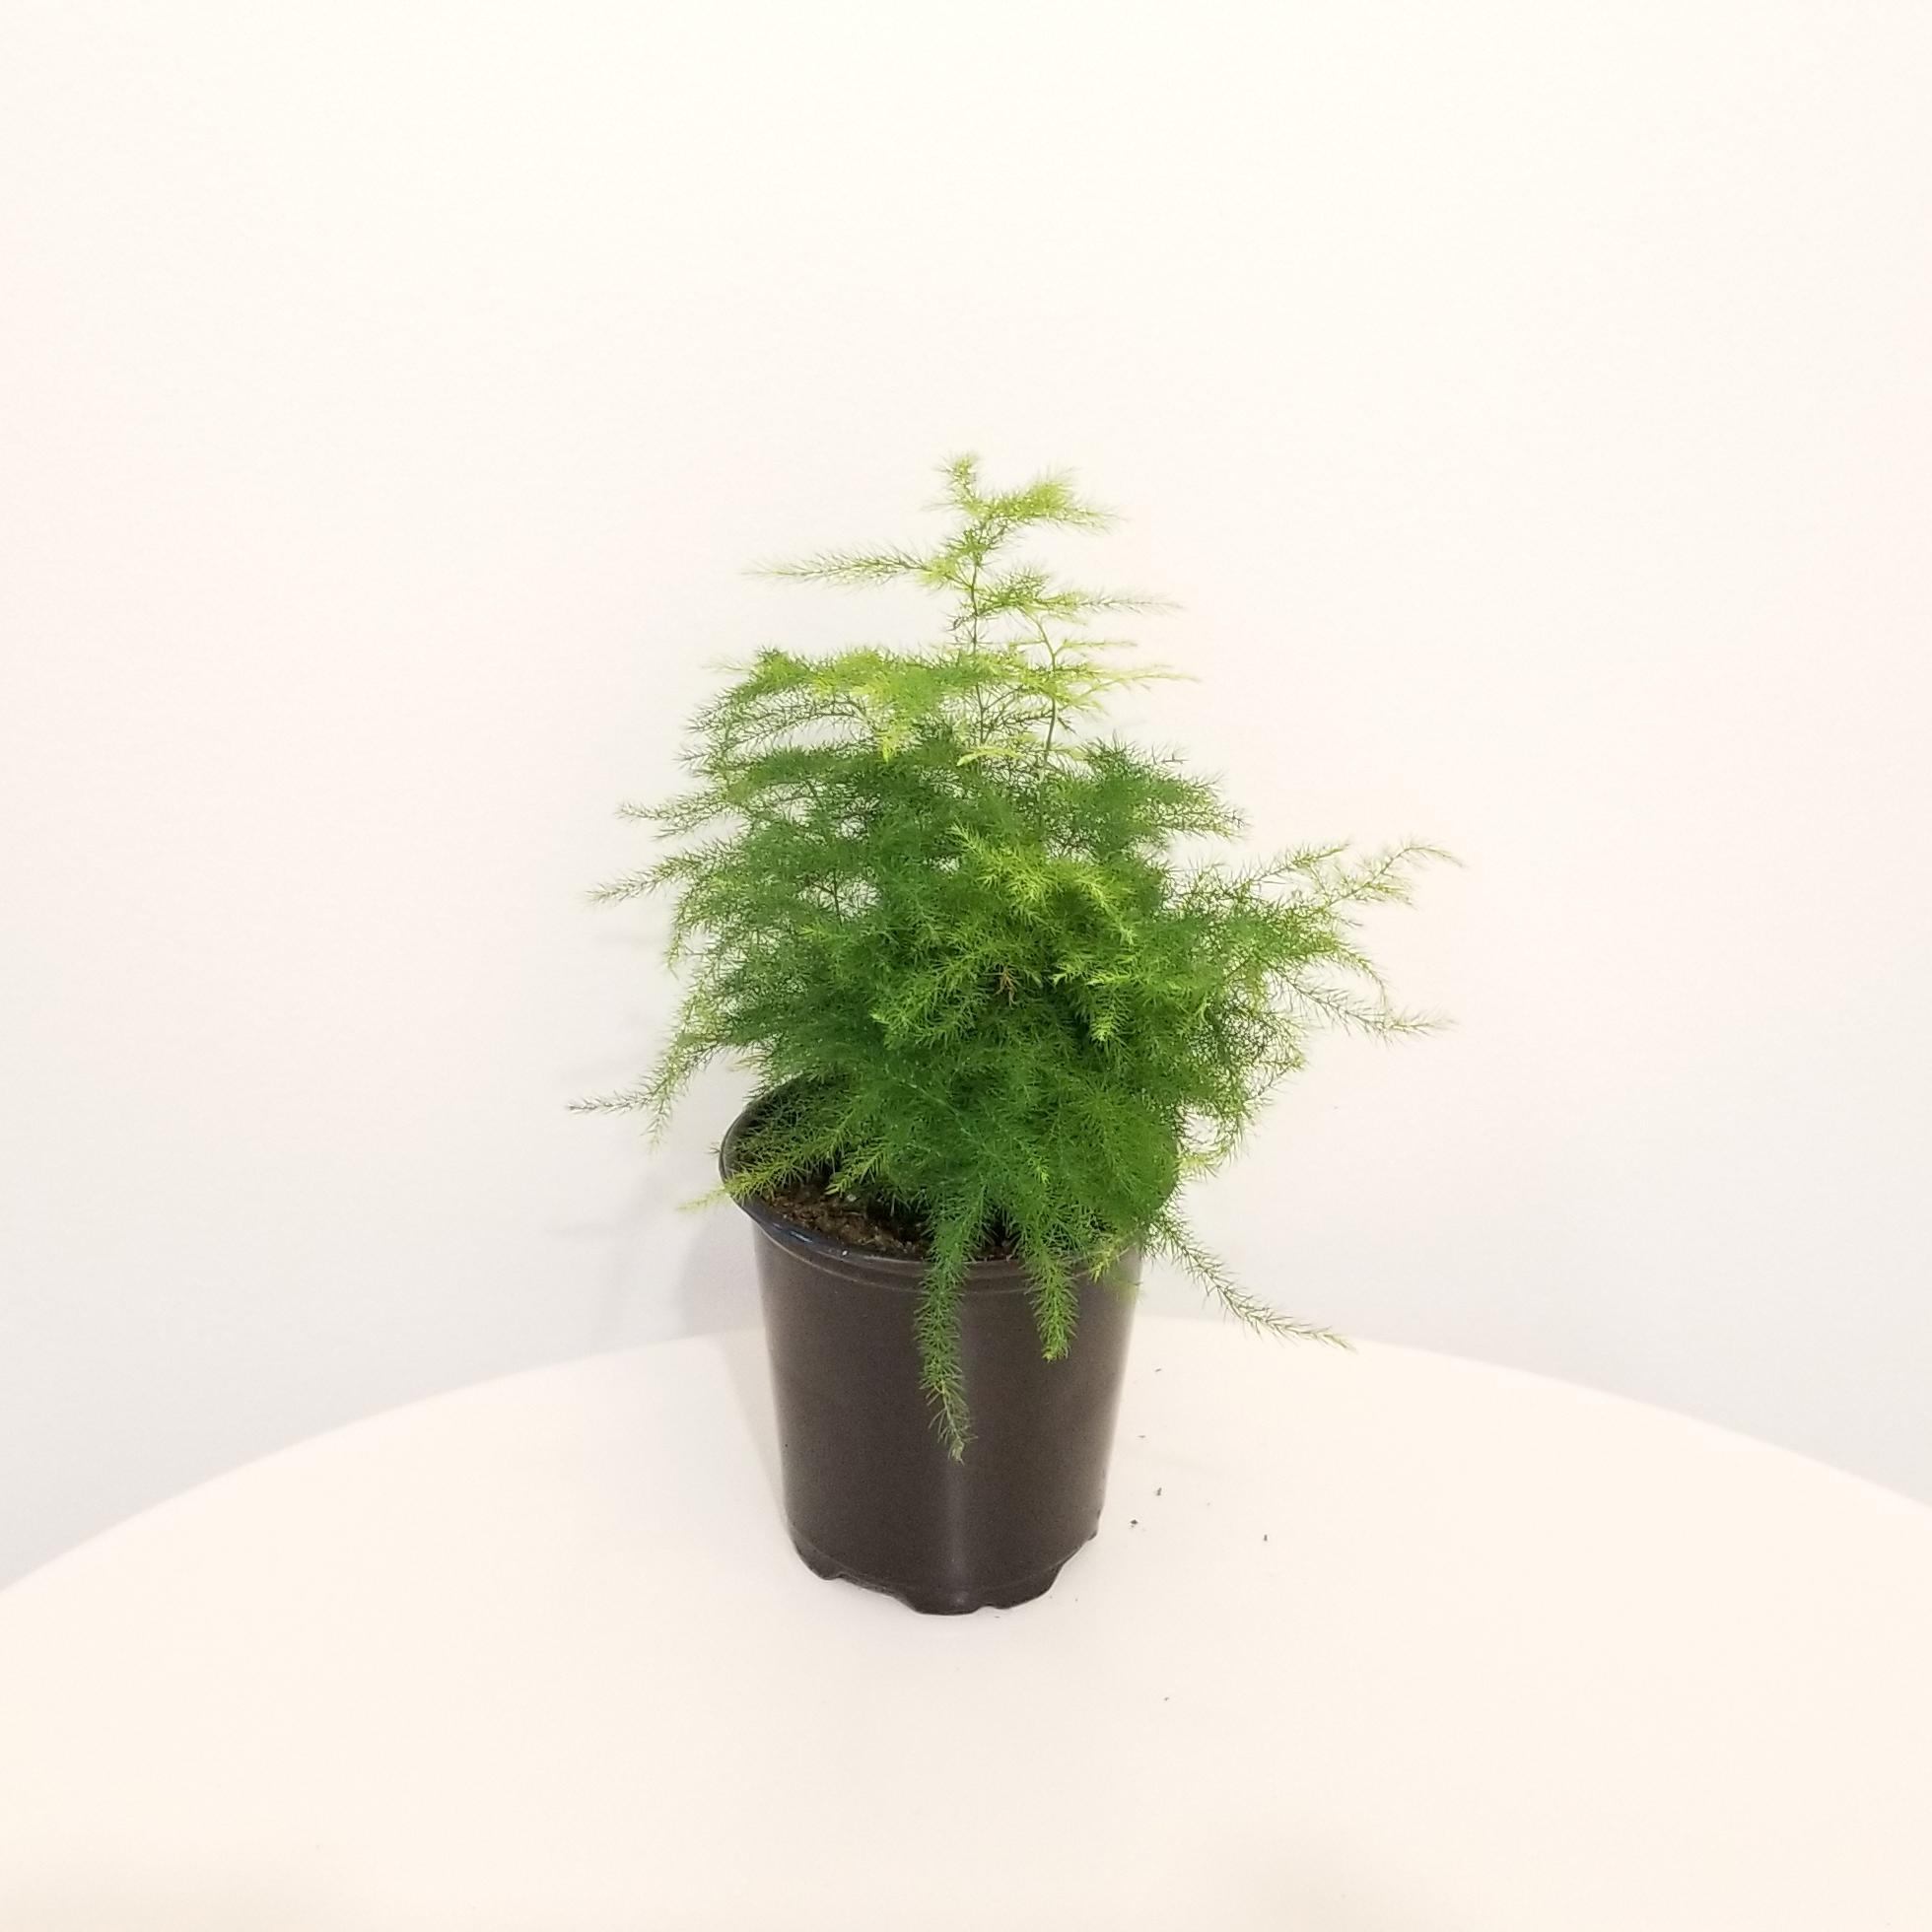 4 Pot Fern Leaf Plumosus Asparagus Fern Live Plant Easy to Grow Houseplant 